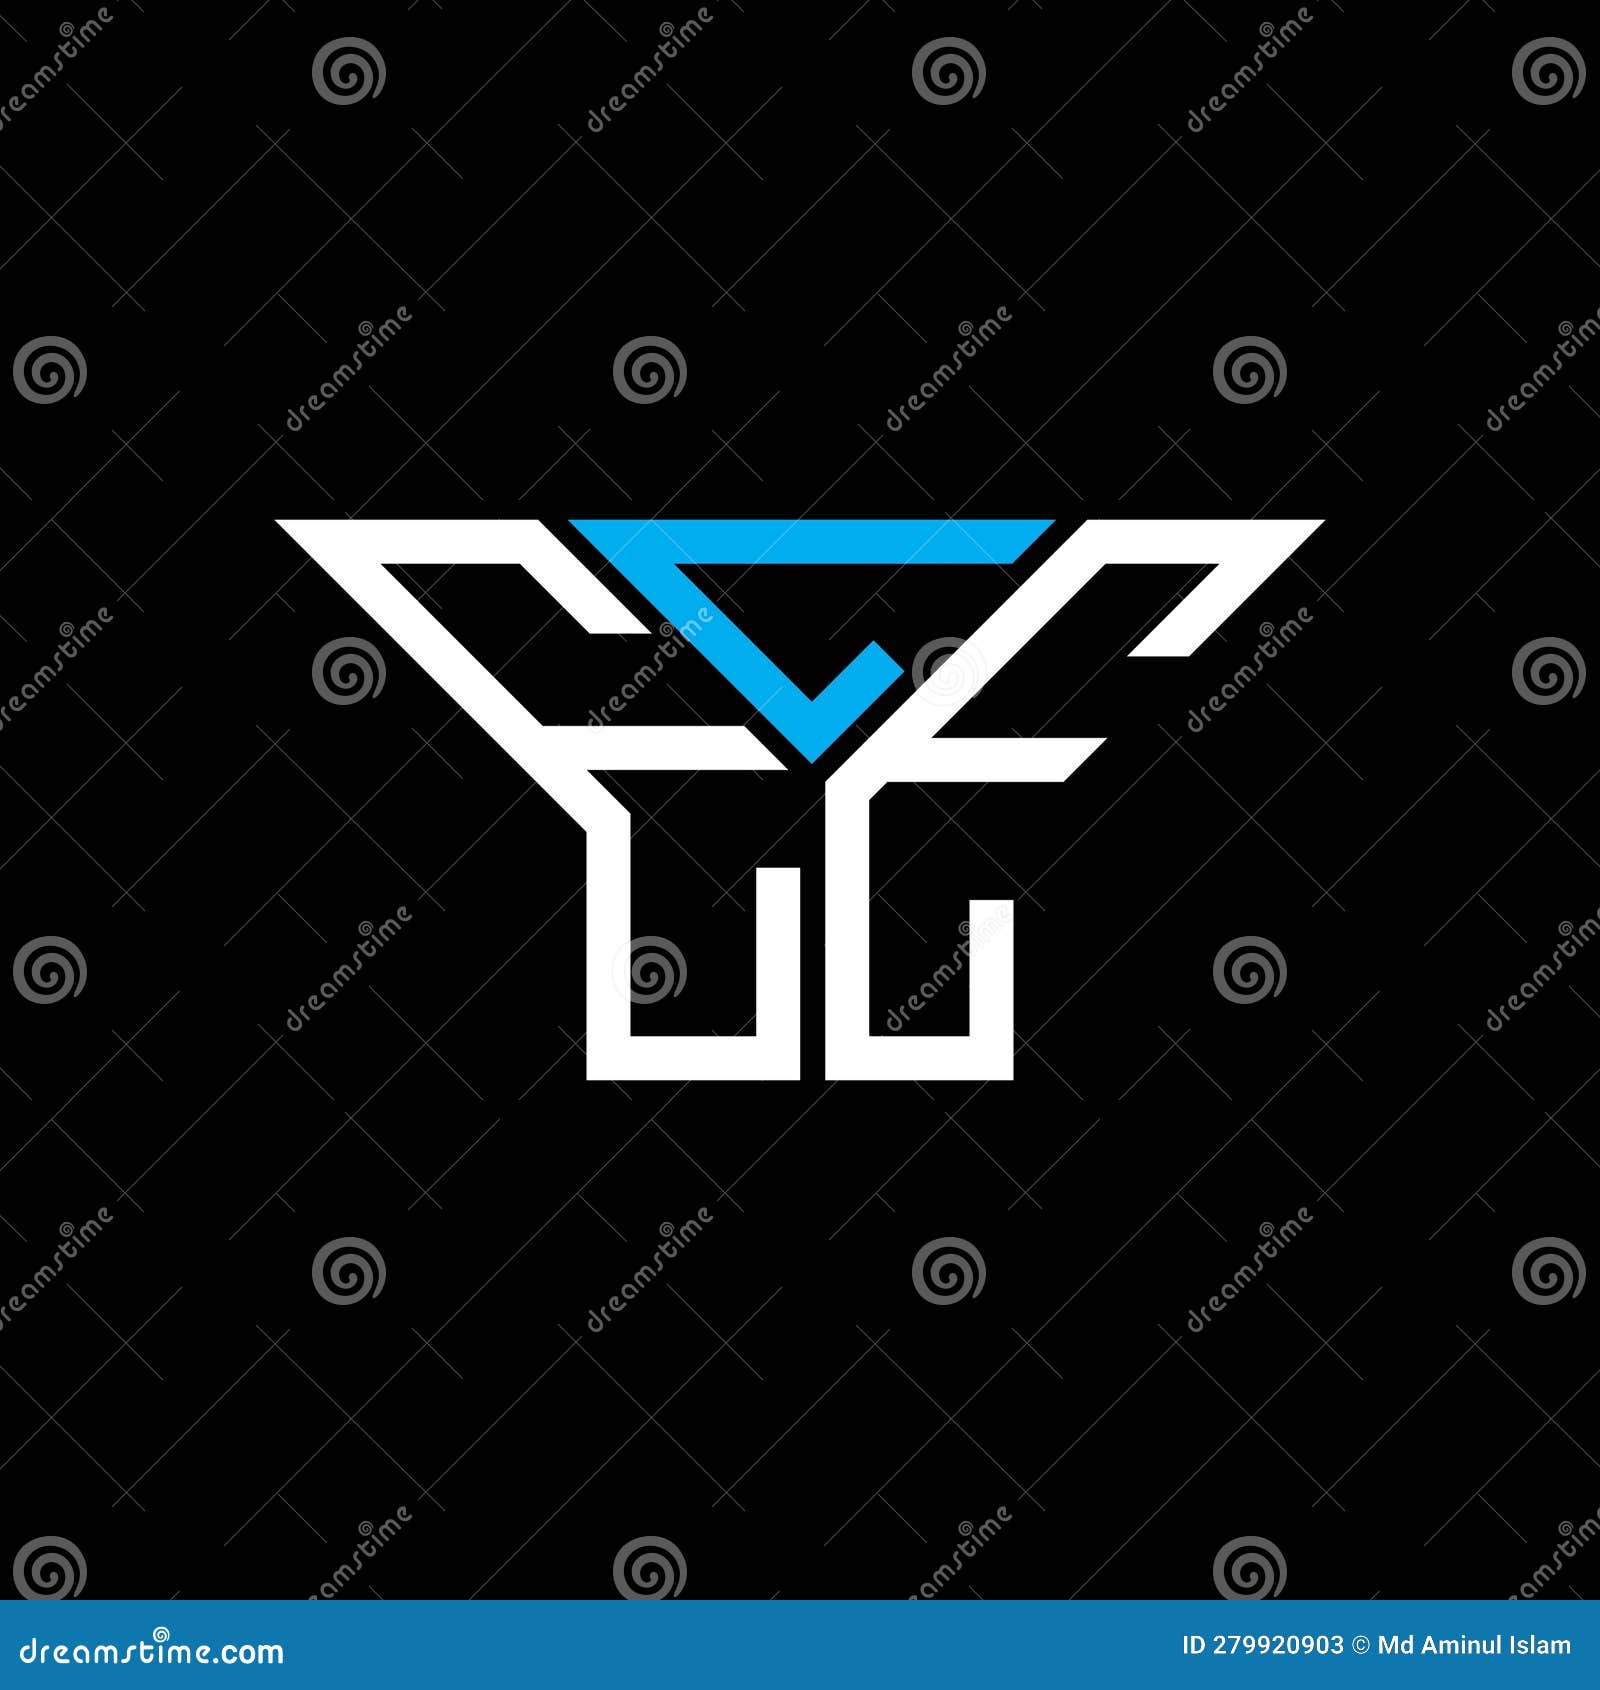 ele letter logo creative  with  graphic, ele